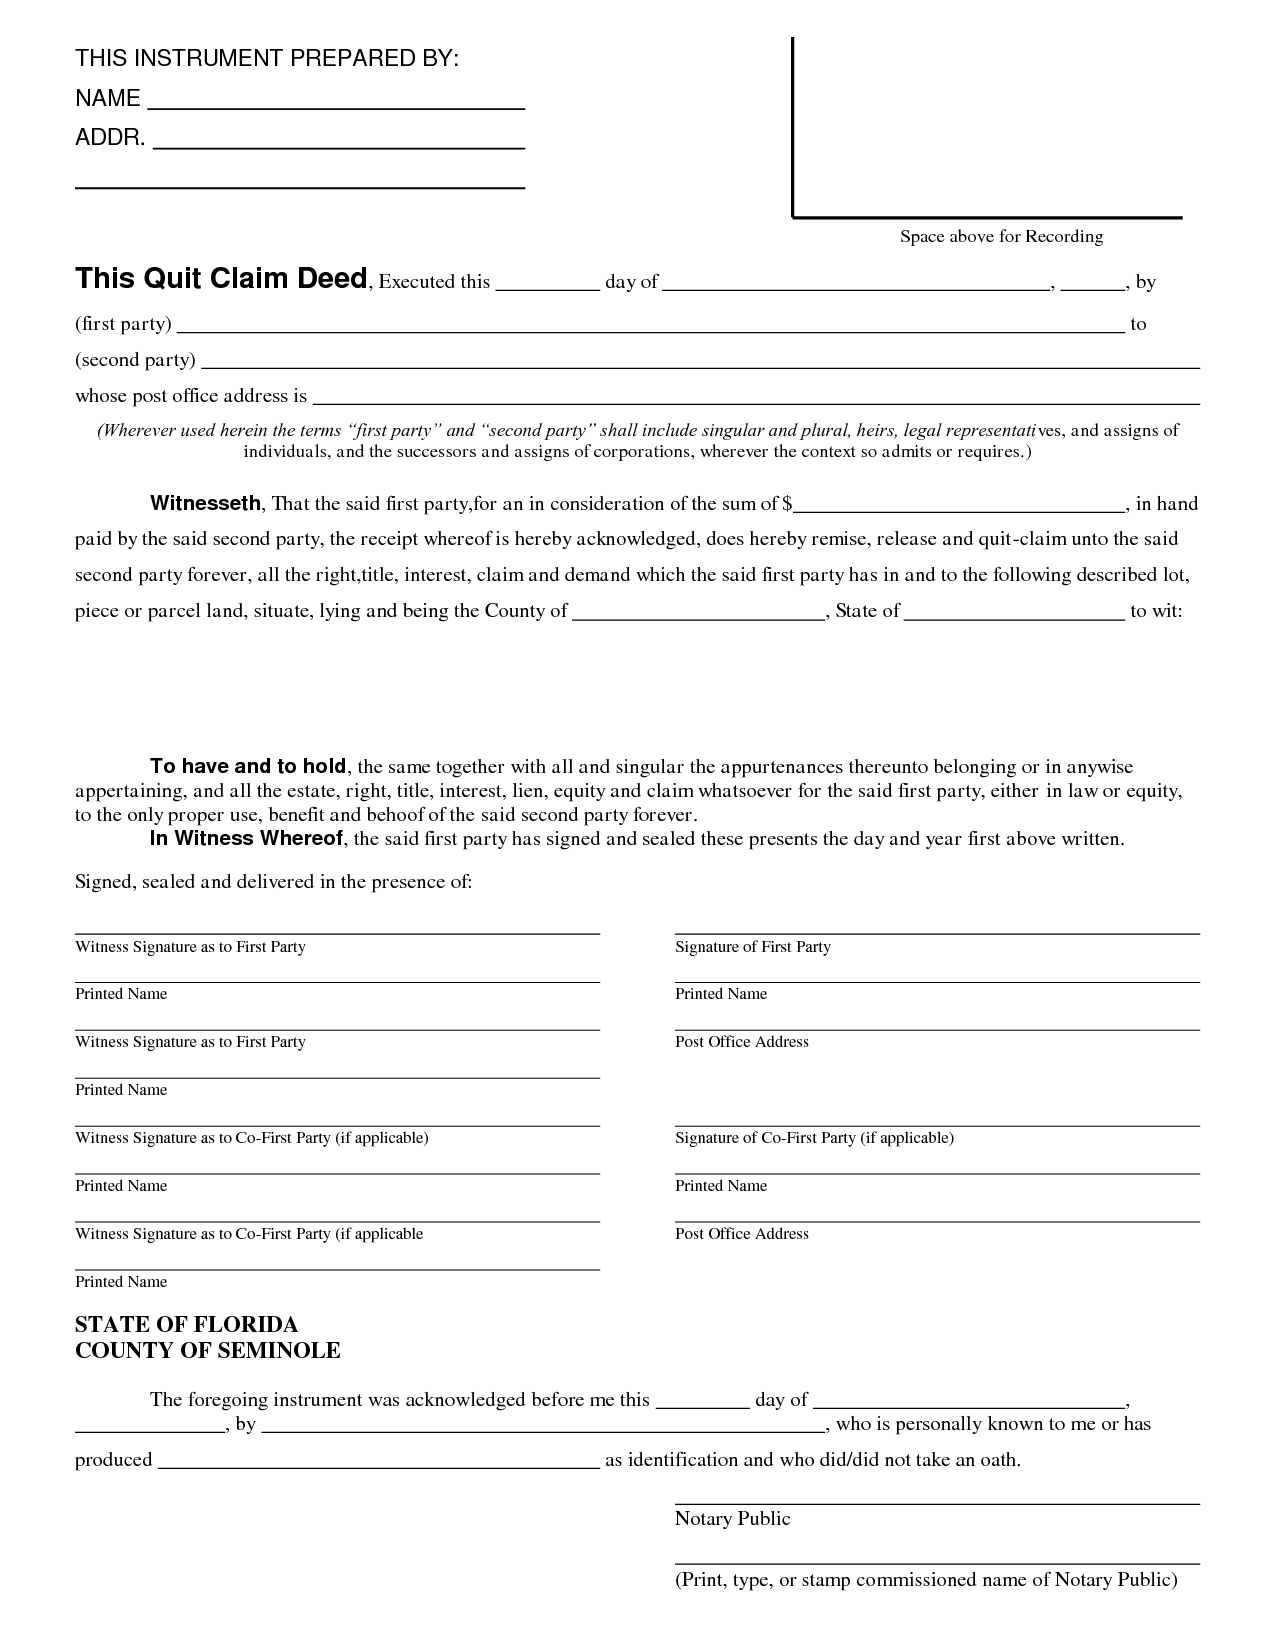 quitclaim-deed-template-free-printable-documents